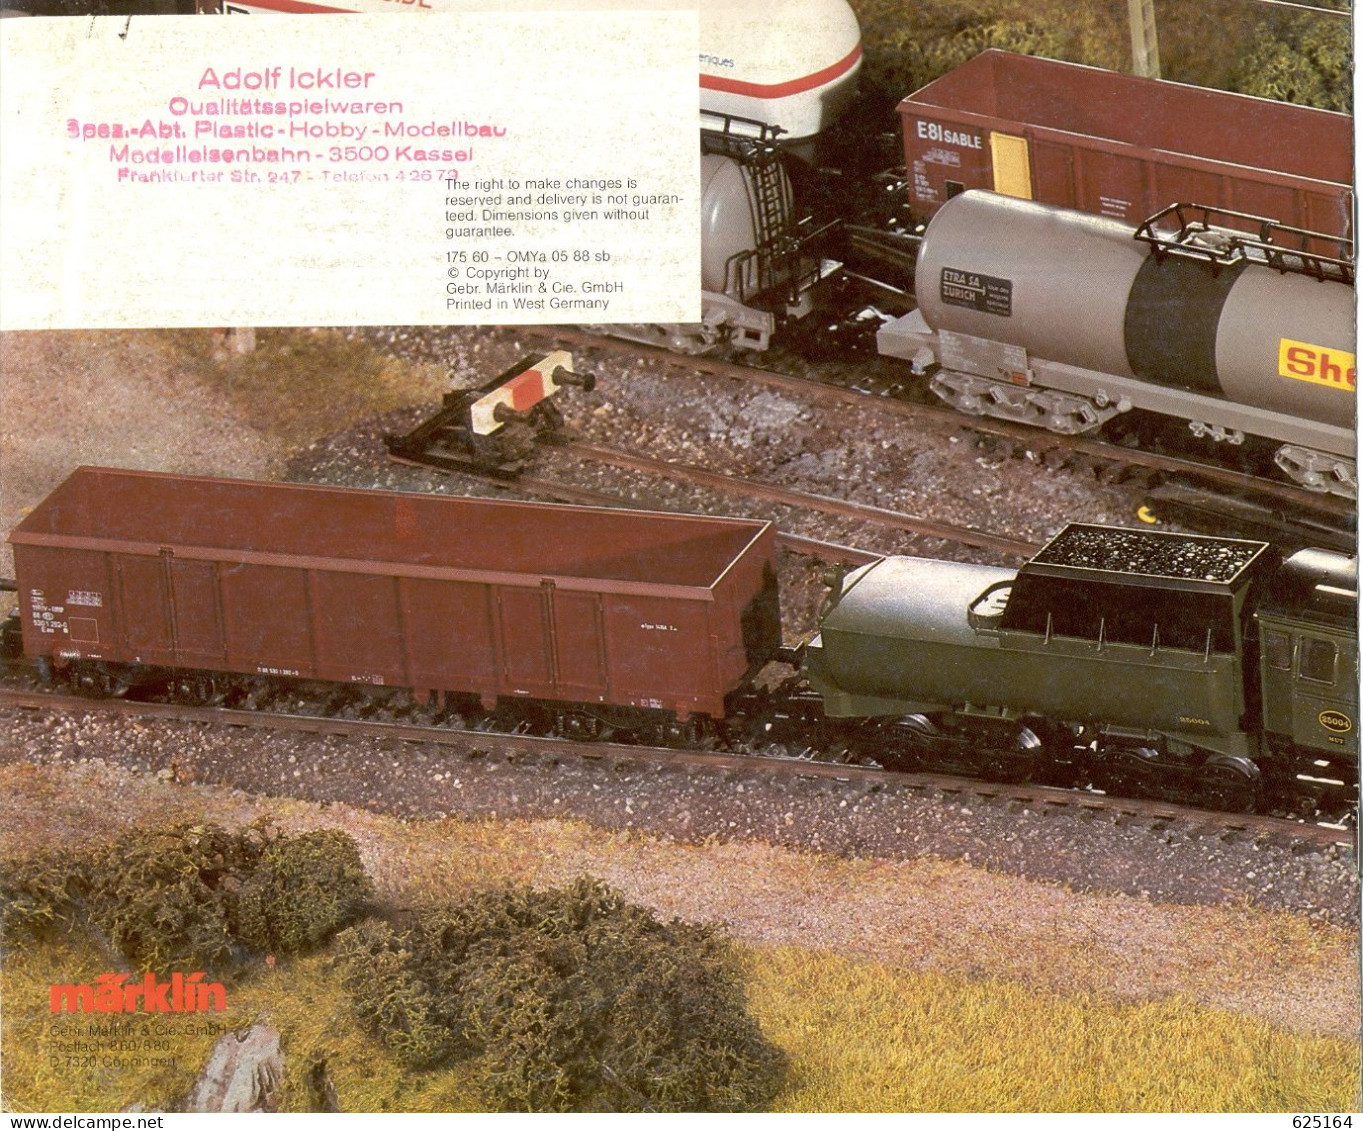 CatalogueMärklin 1988/89 Export Modelle Maquettes Exportation - En Allemand, Anglais Et Français - Francés